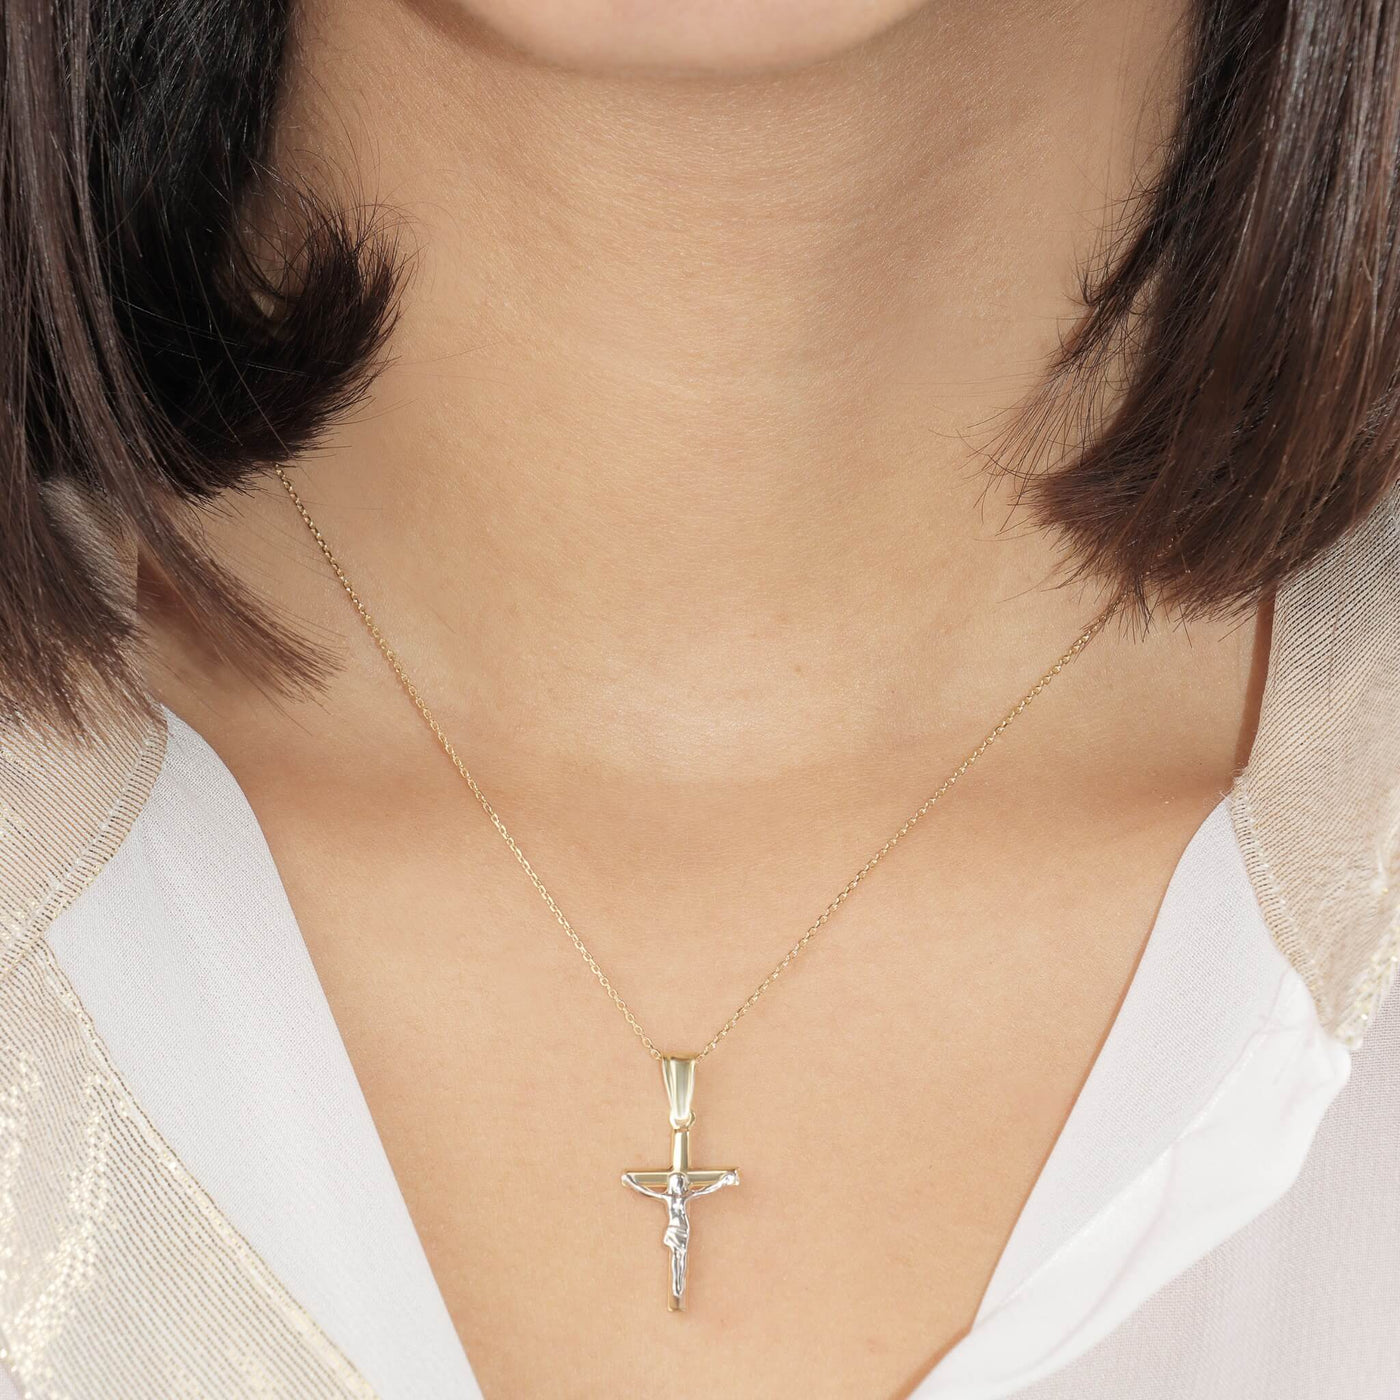 Striking Crucifix Pendant Necklace - Gloria Jewels